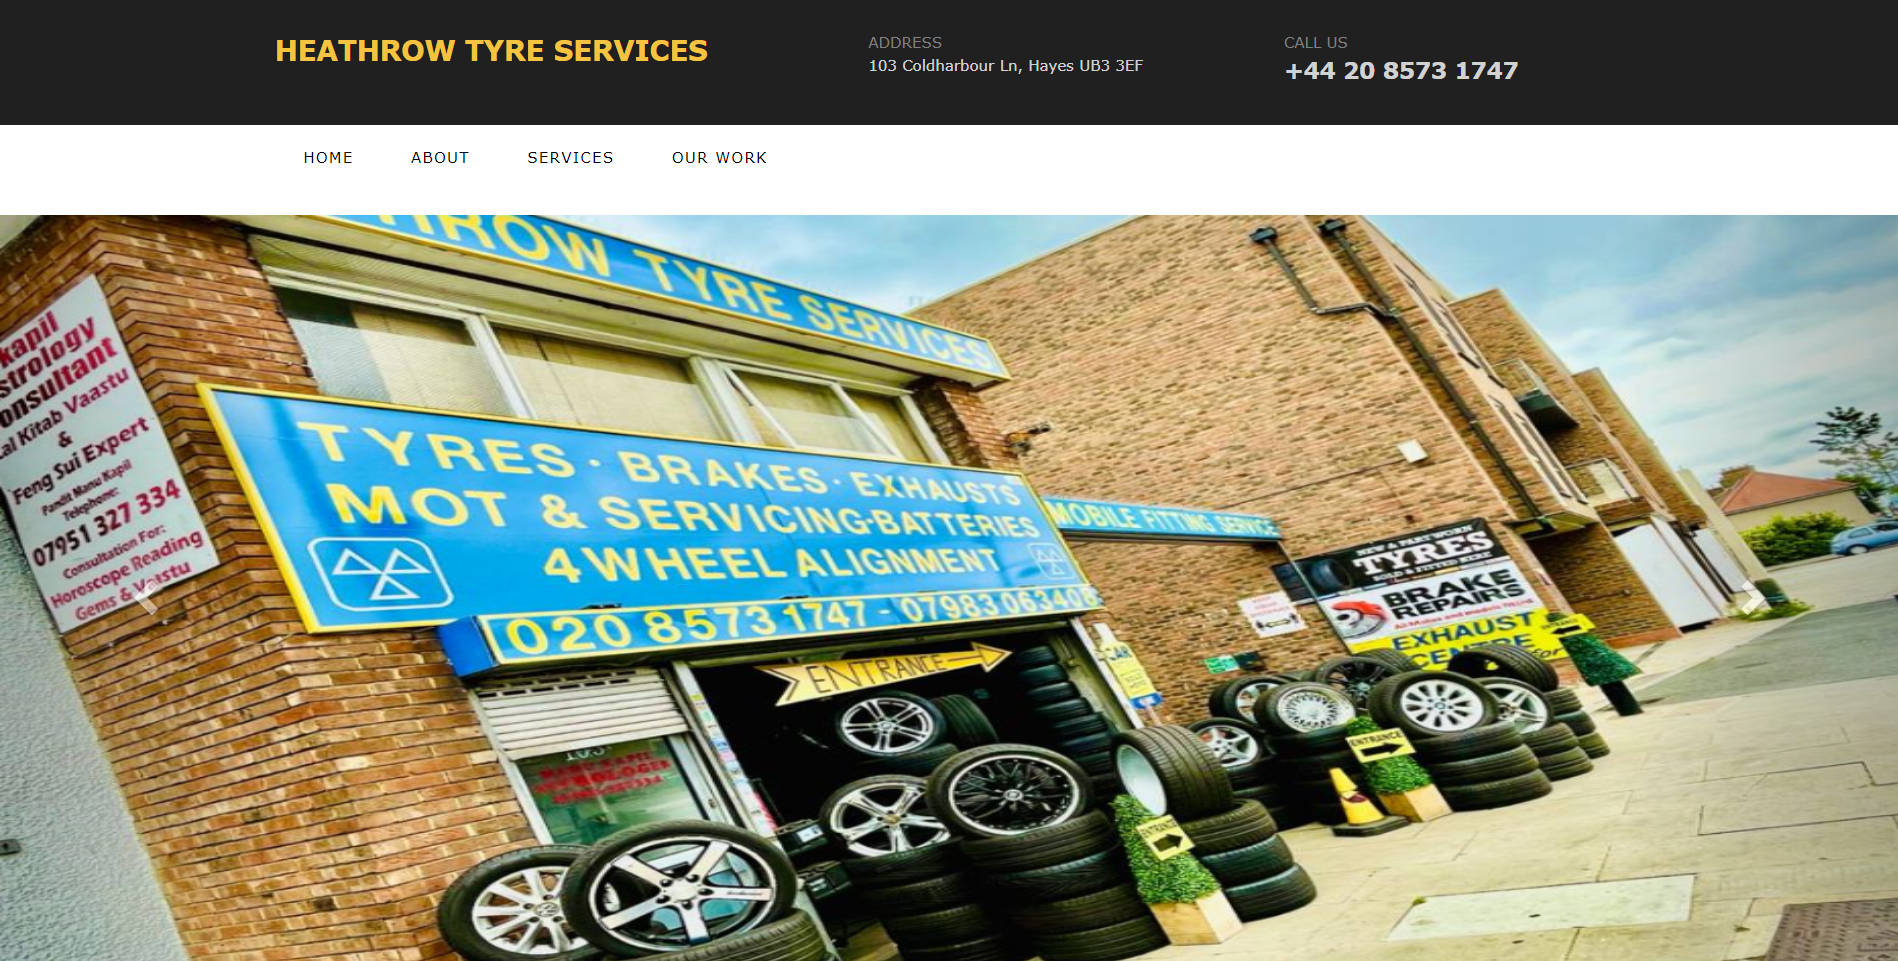 Heathrow Tyre Services